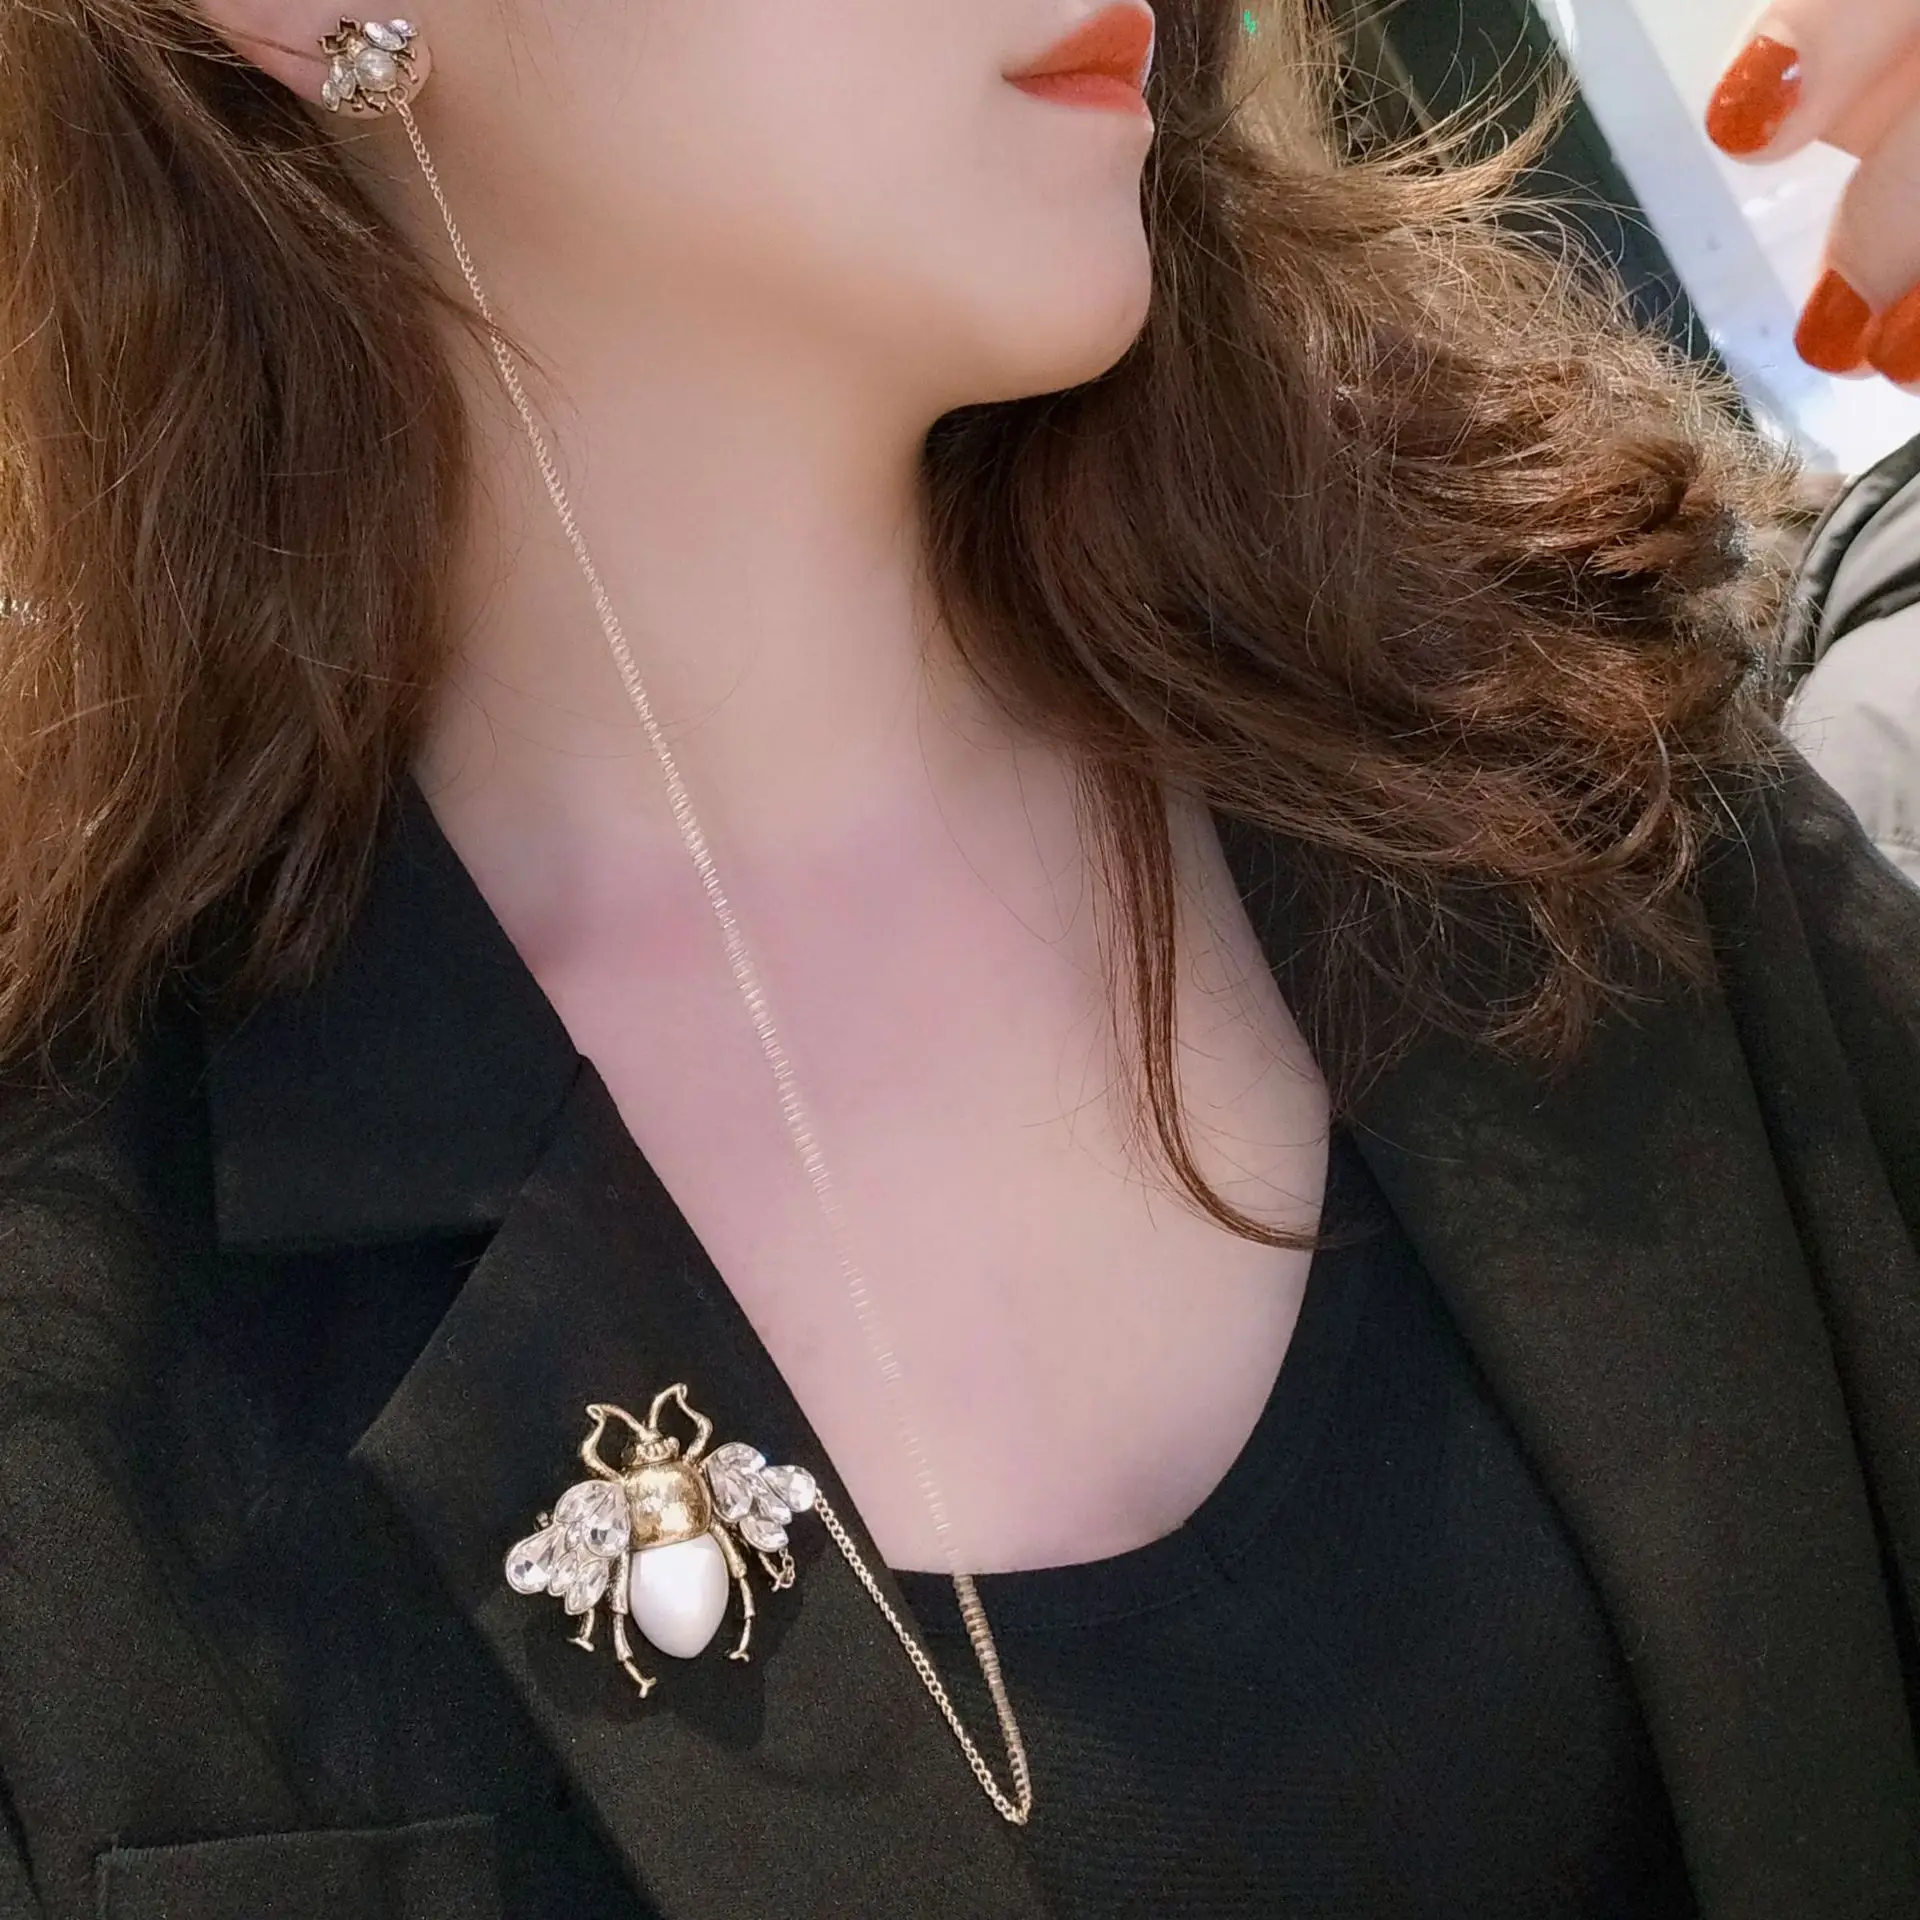 

creative crystal pearl bee brooch earrings hang necklace glasses chain earrings elegant creative earring jewelry gift women, Picture